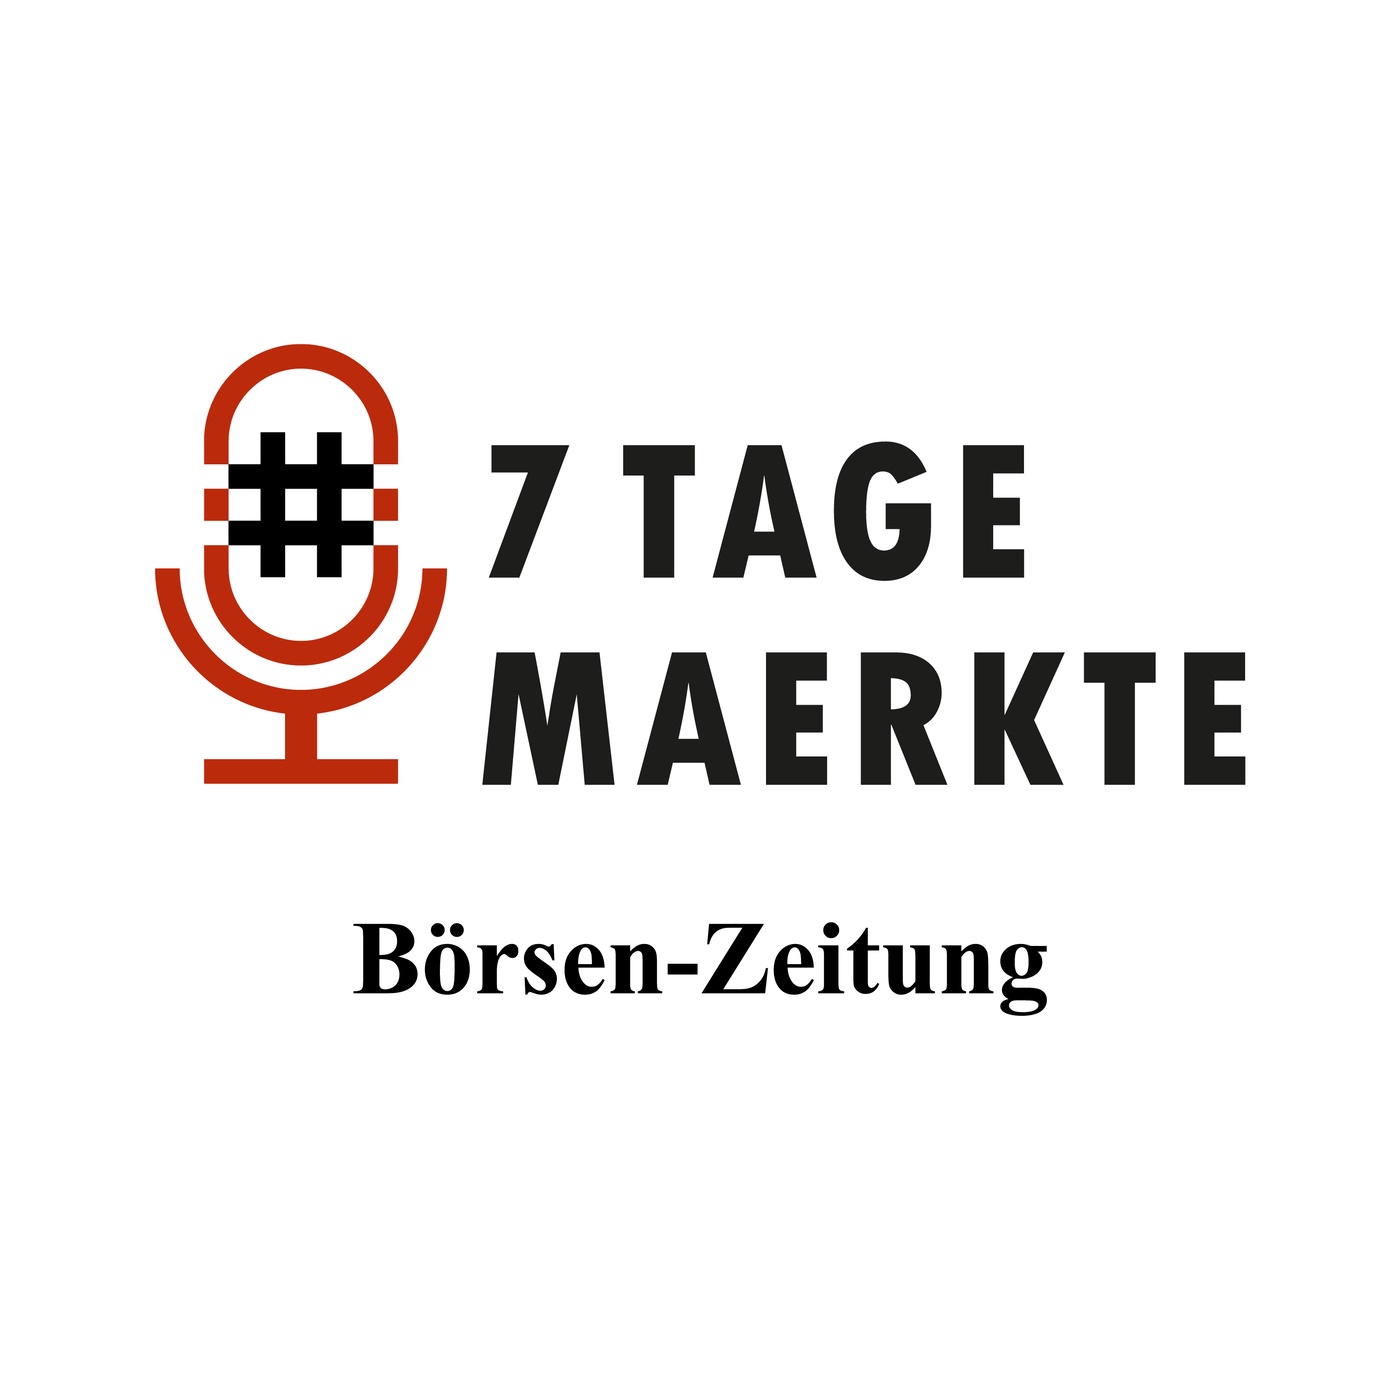 Börsen-Zeitung | 7 Tage Märkte